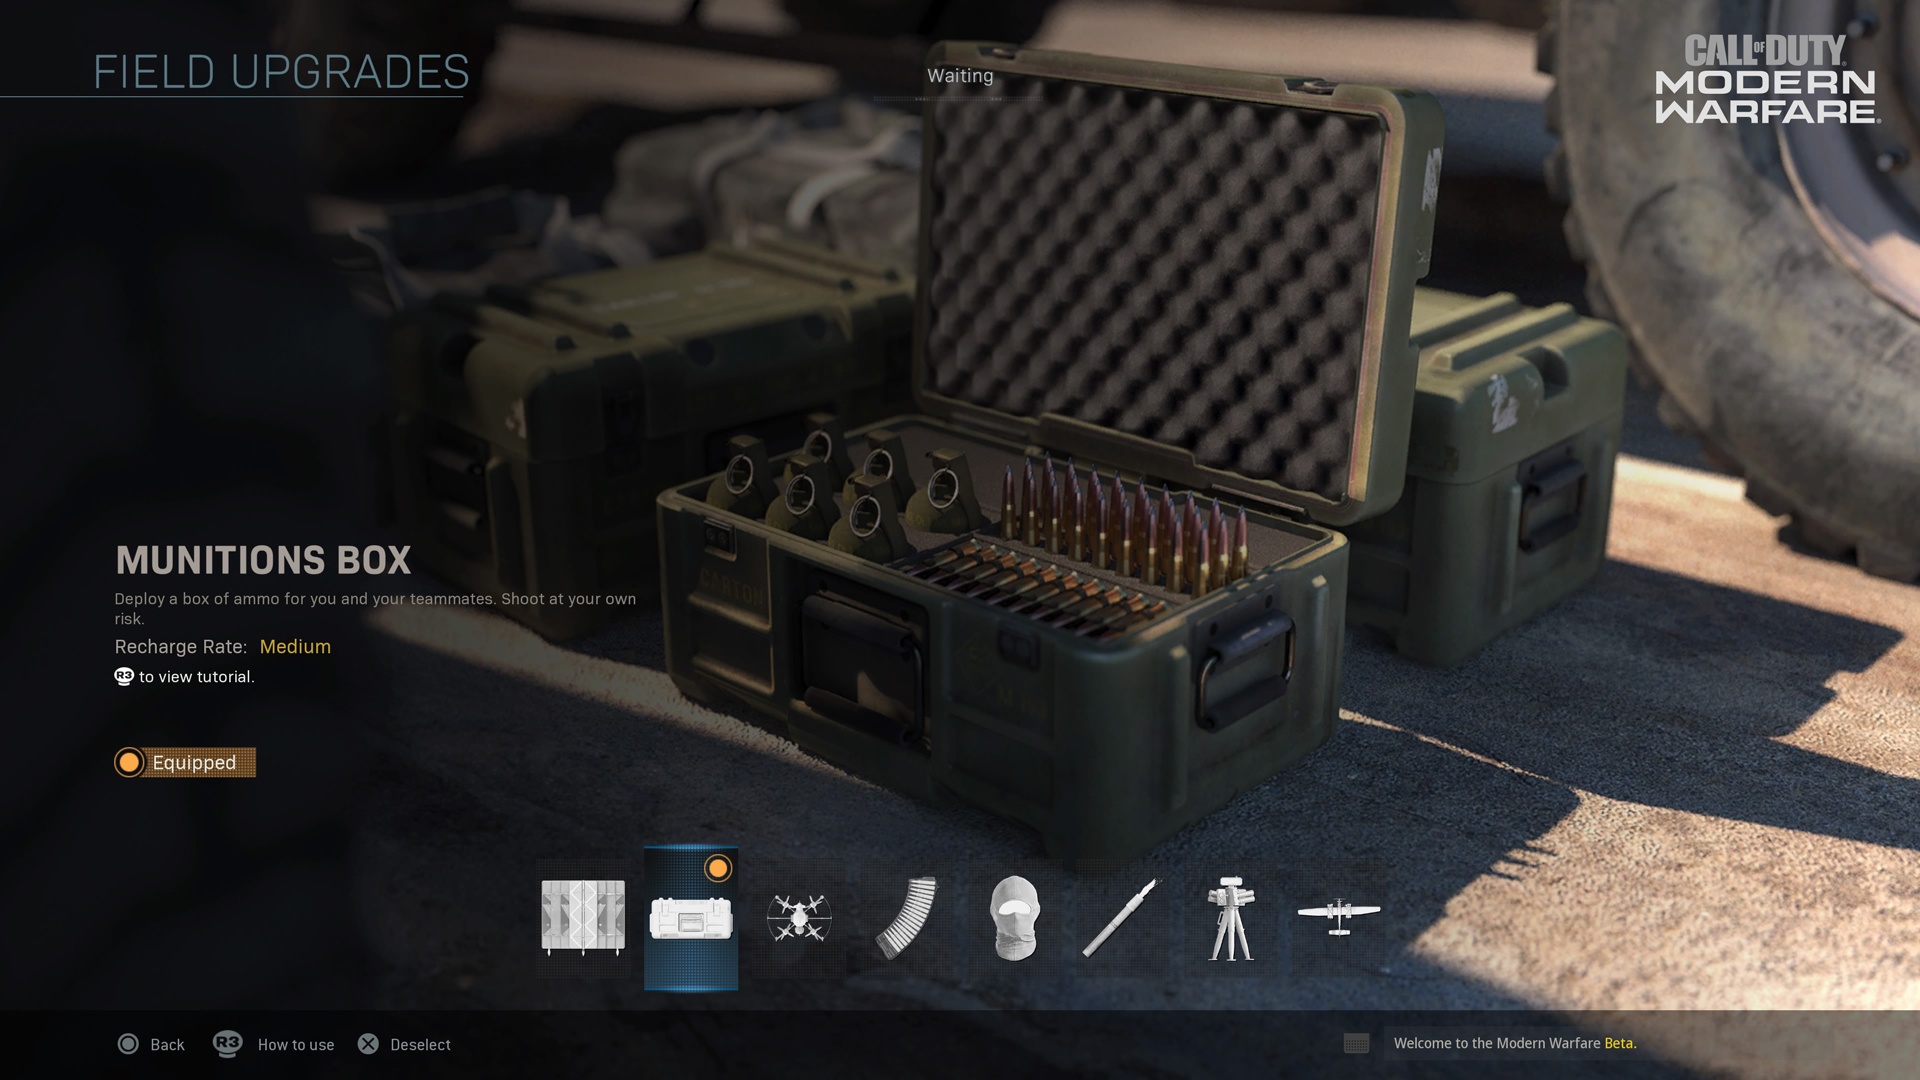 The Basics Of Call Of Duty Modern Warfare Field Upgrades